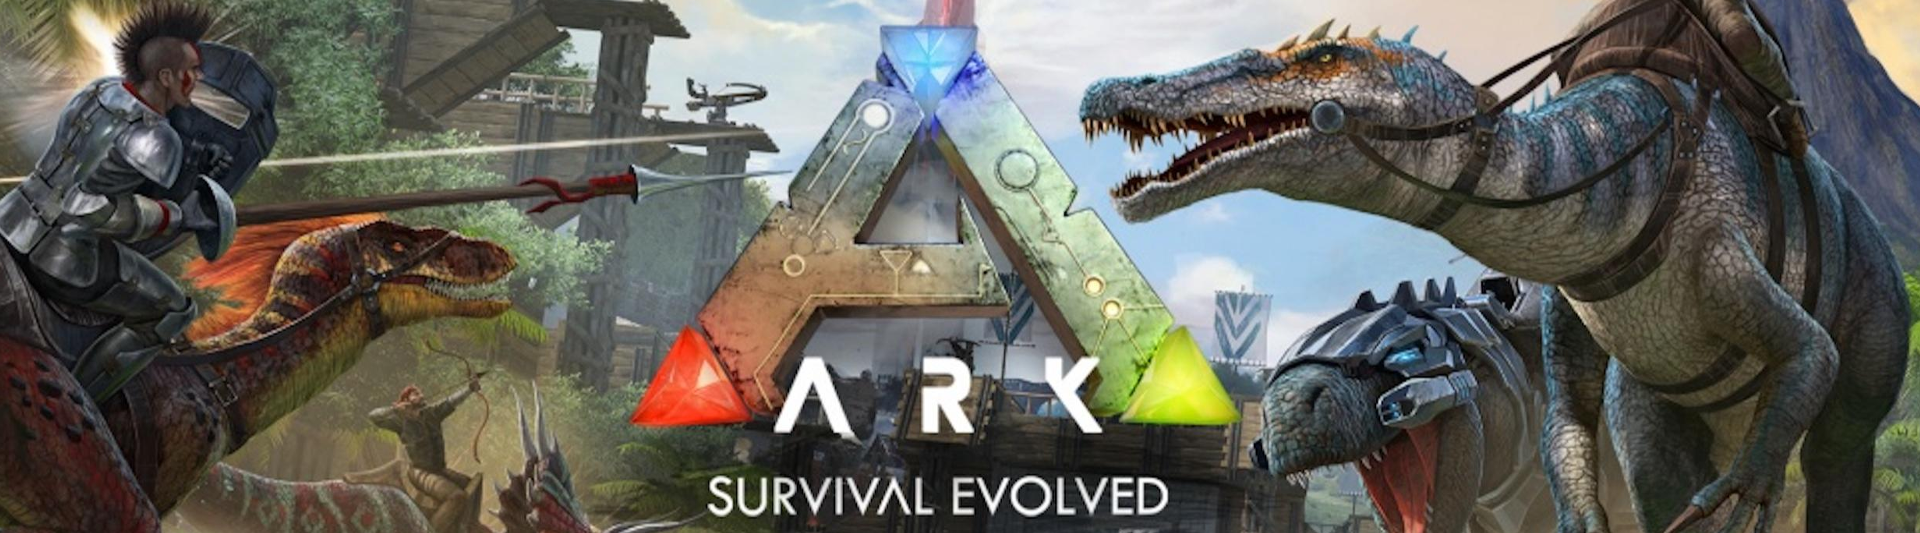 ARK: Survival Evolved Details - LaunchBox Games Database